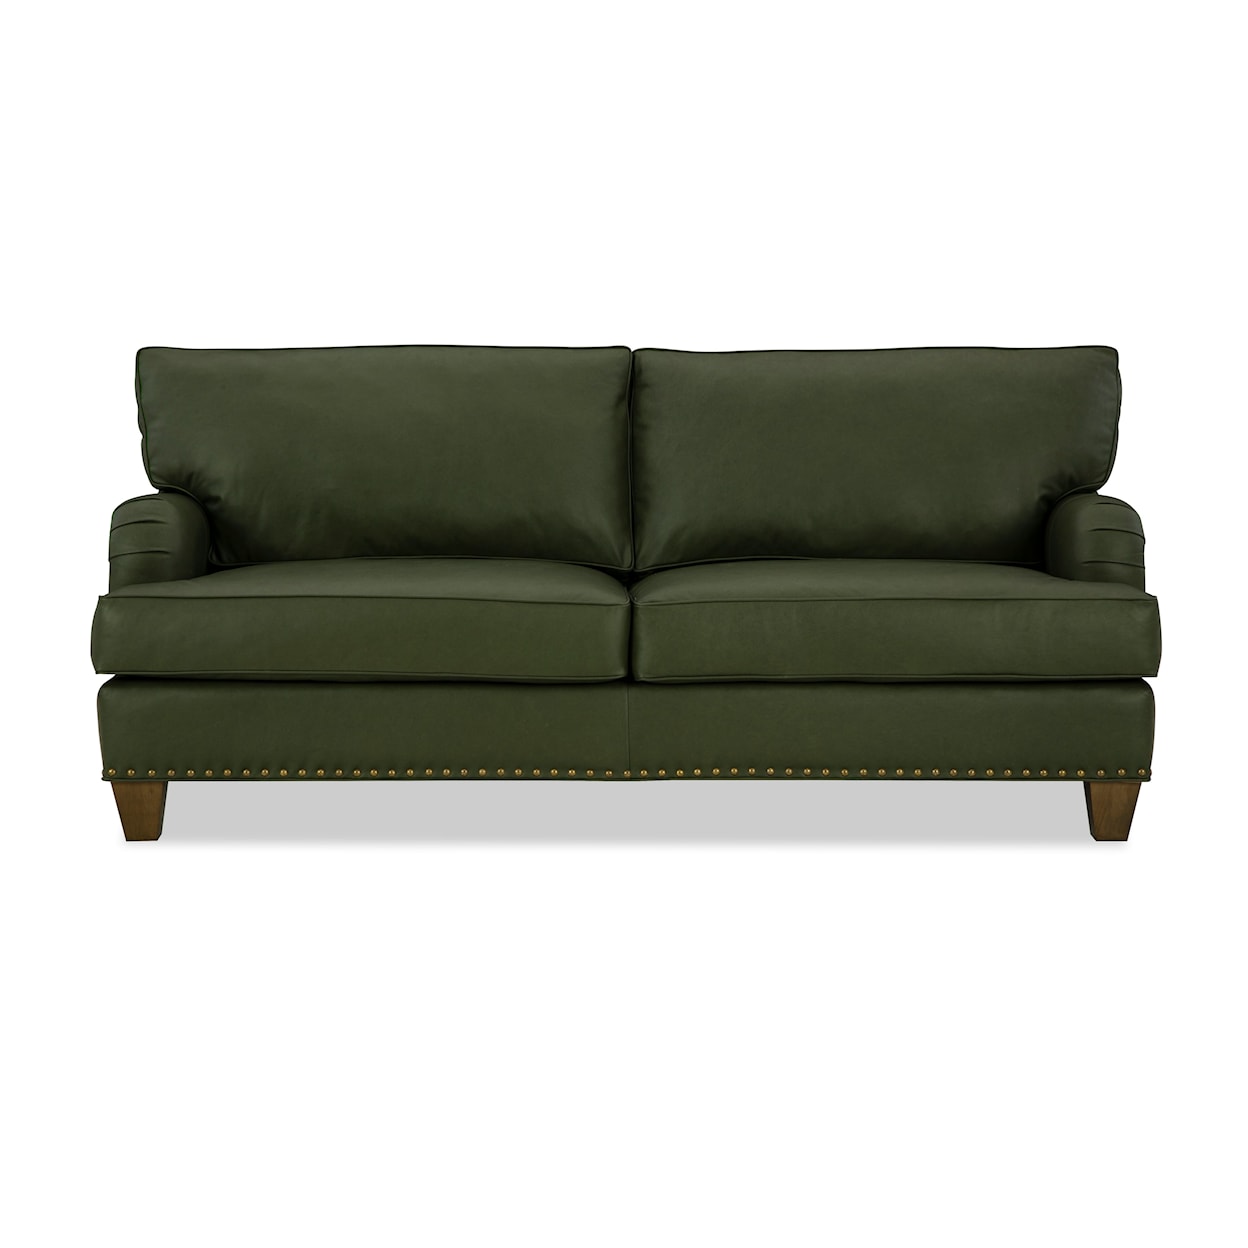 Hickory Craft DESIGN OPTIONS-LC9 Shallow 2-Seat Sofa